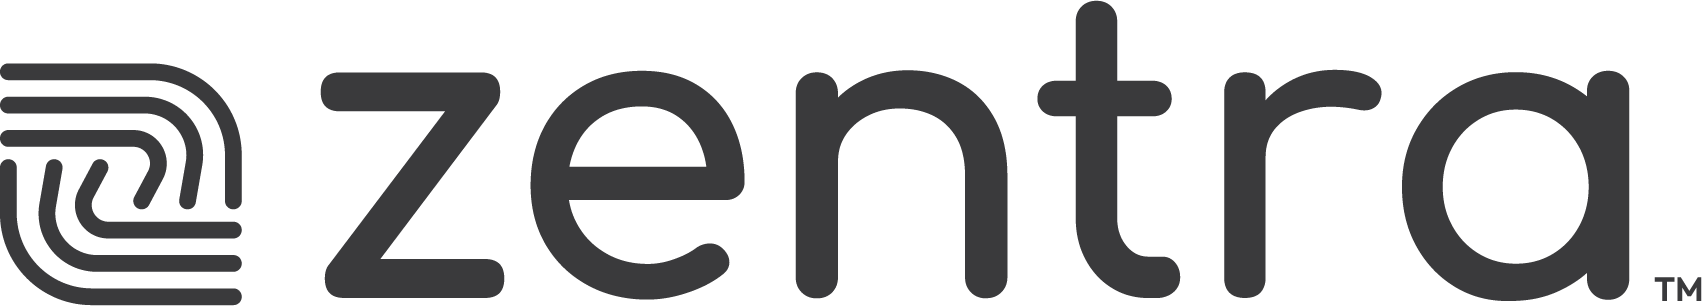 Zentra logo